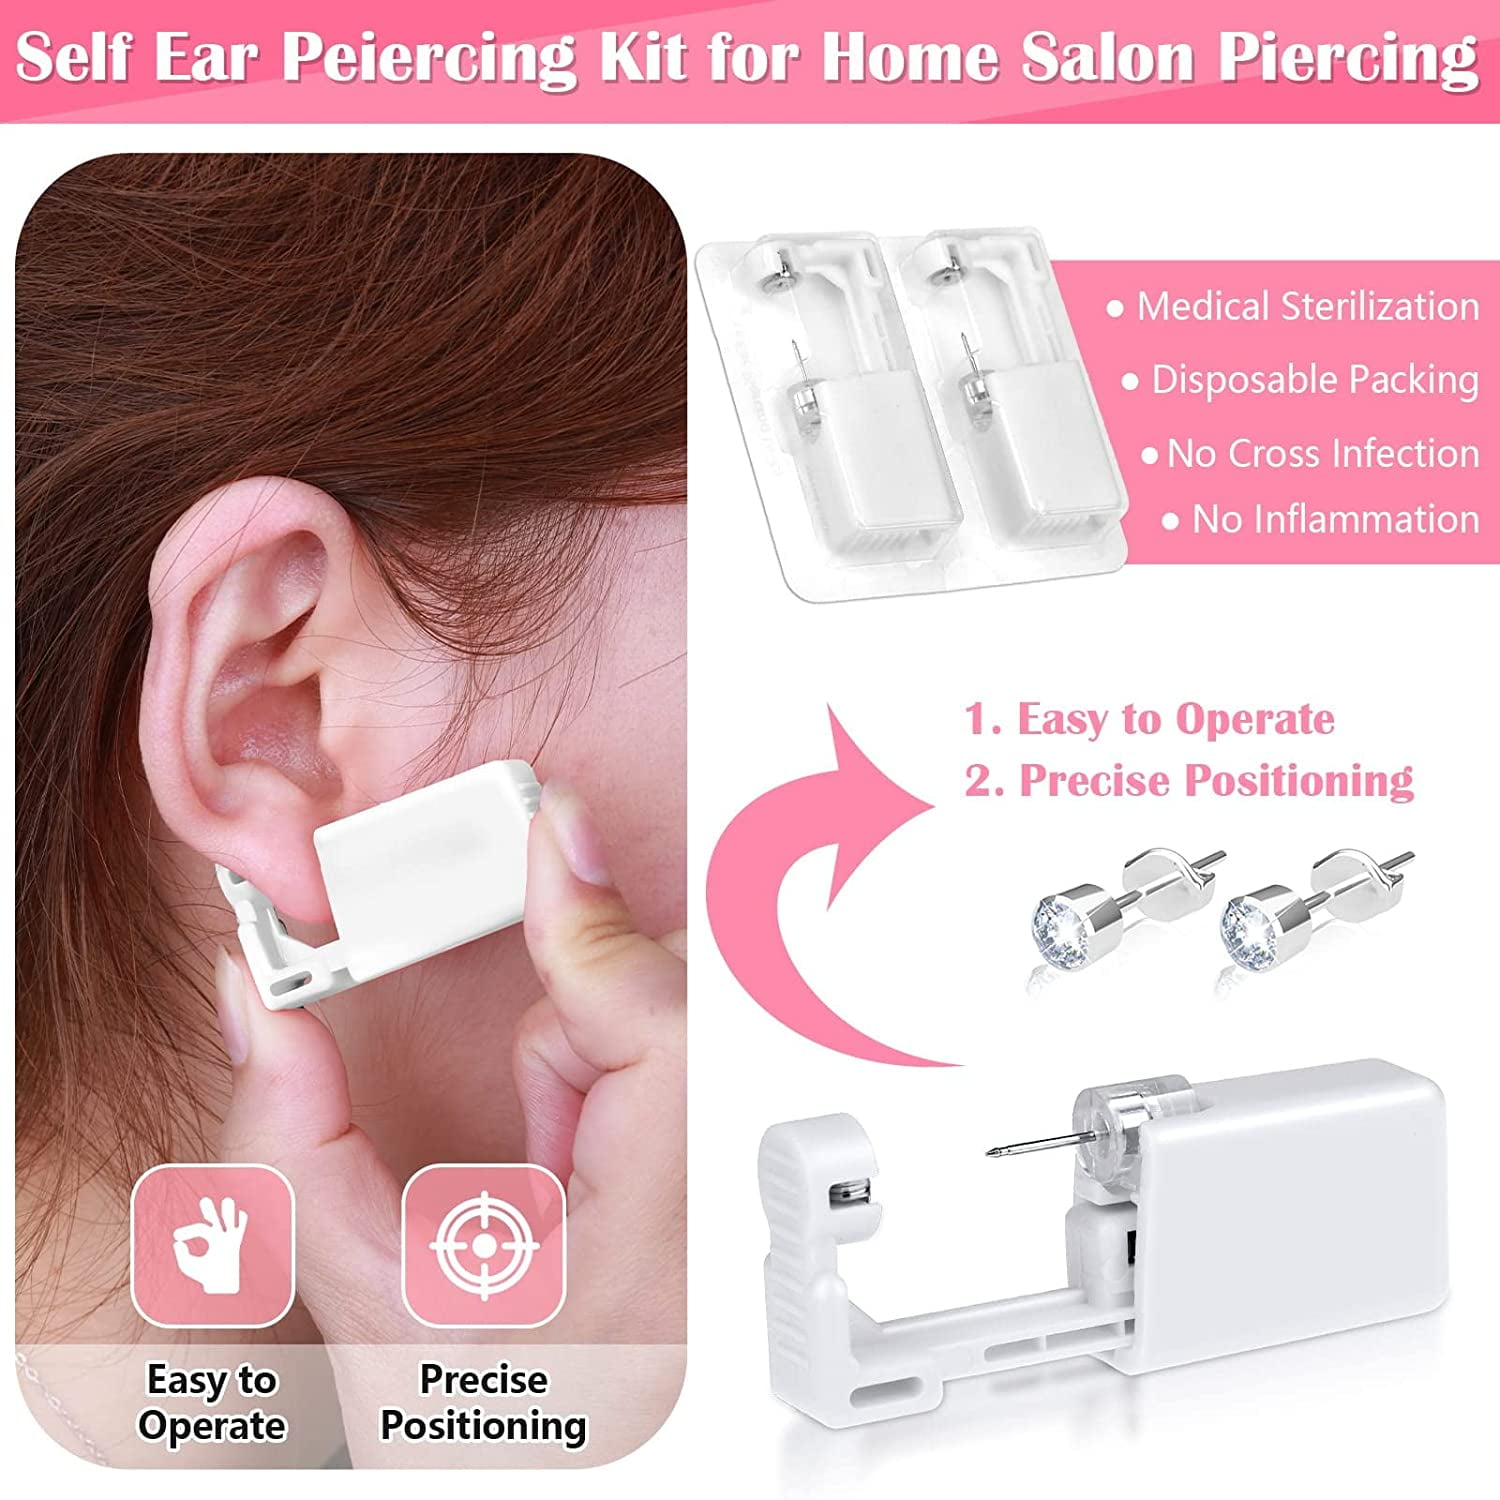 Ear Piercing Gun,10 Pack Ear Piercing Kit Disposable Self Ear Piercing Gun  with Sterling Silver Ear Sticks and Clean Tool Pierce Kit Tool for Nose